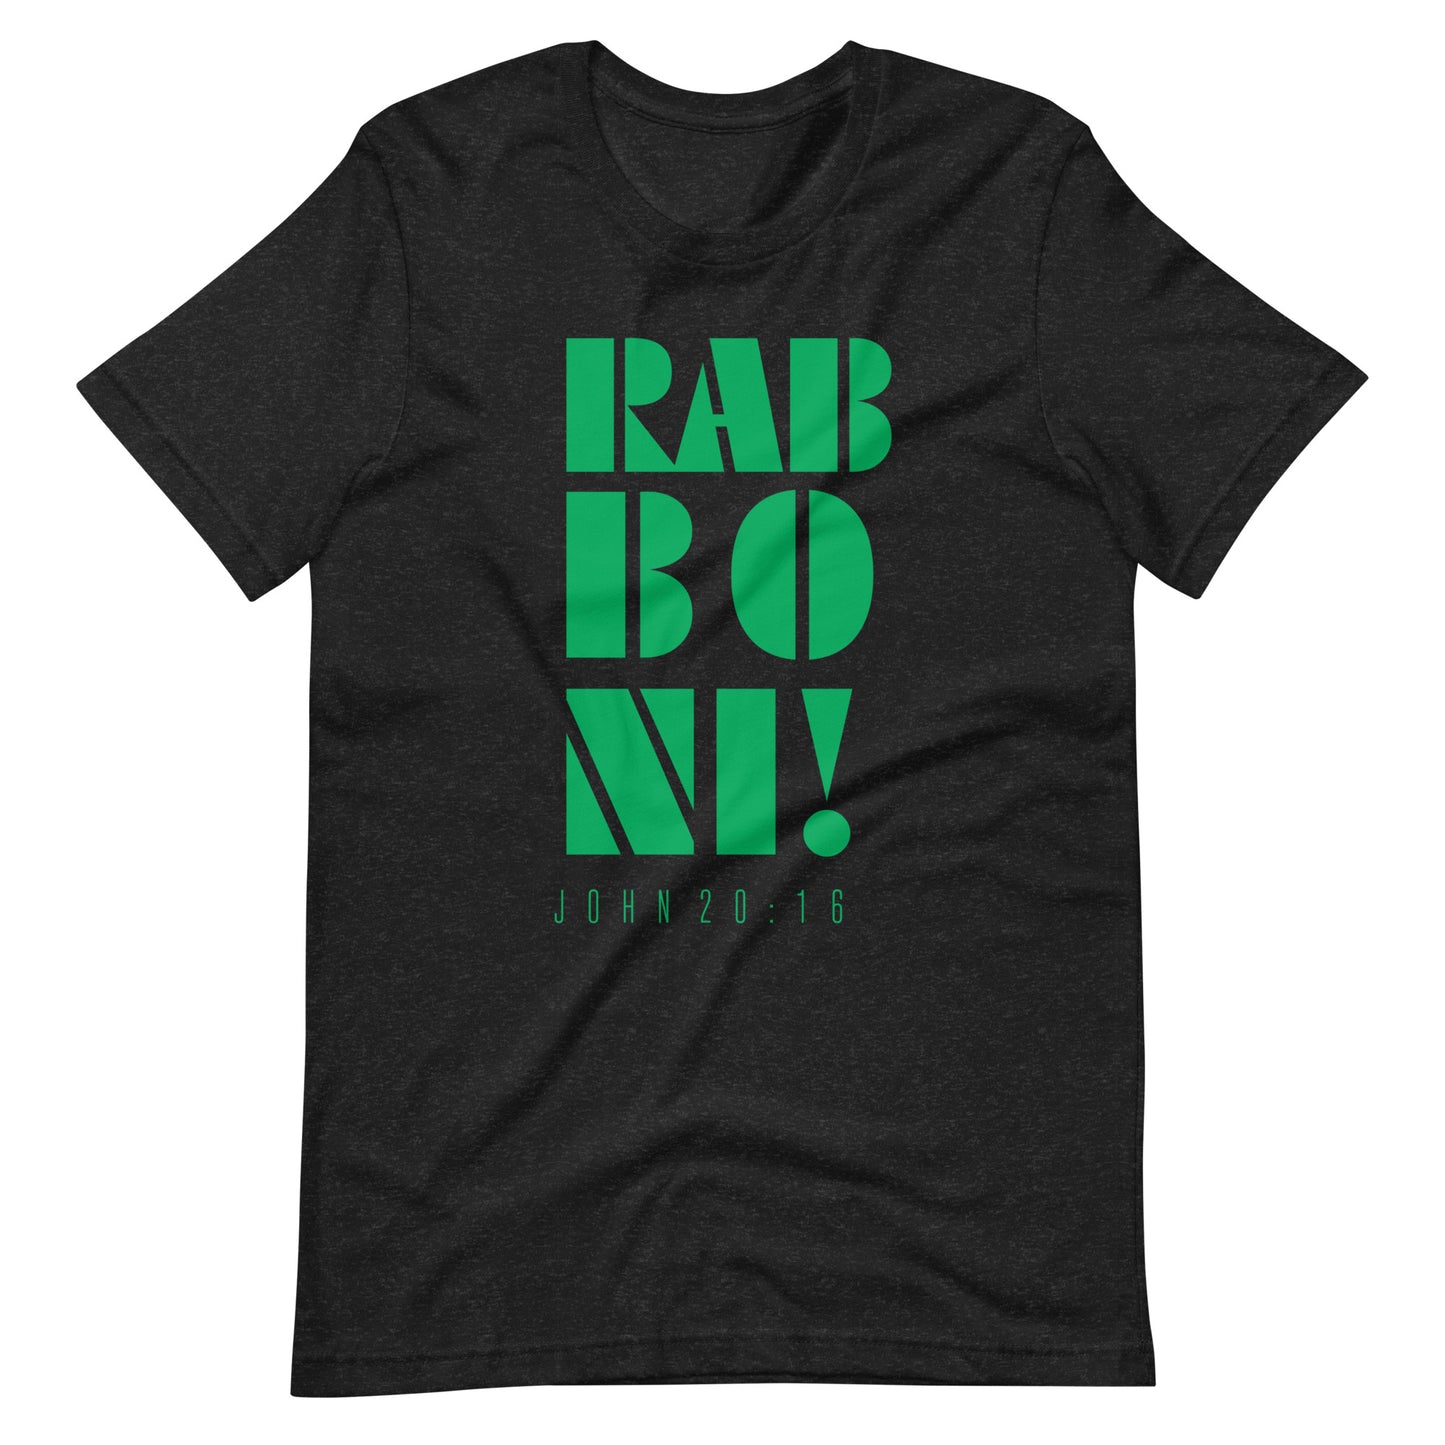 Rabboni! T-shirt black tee with green writing